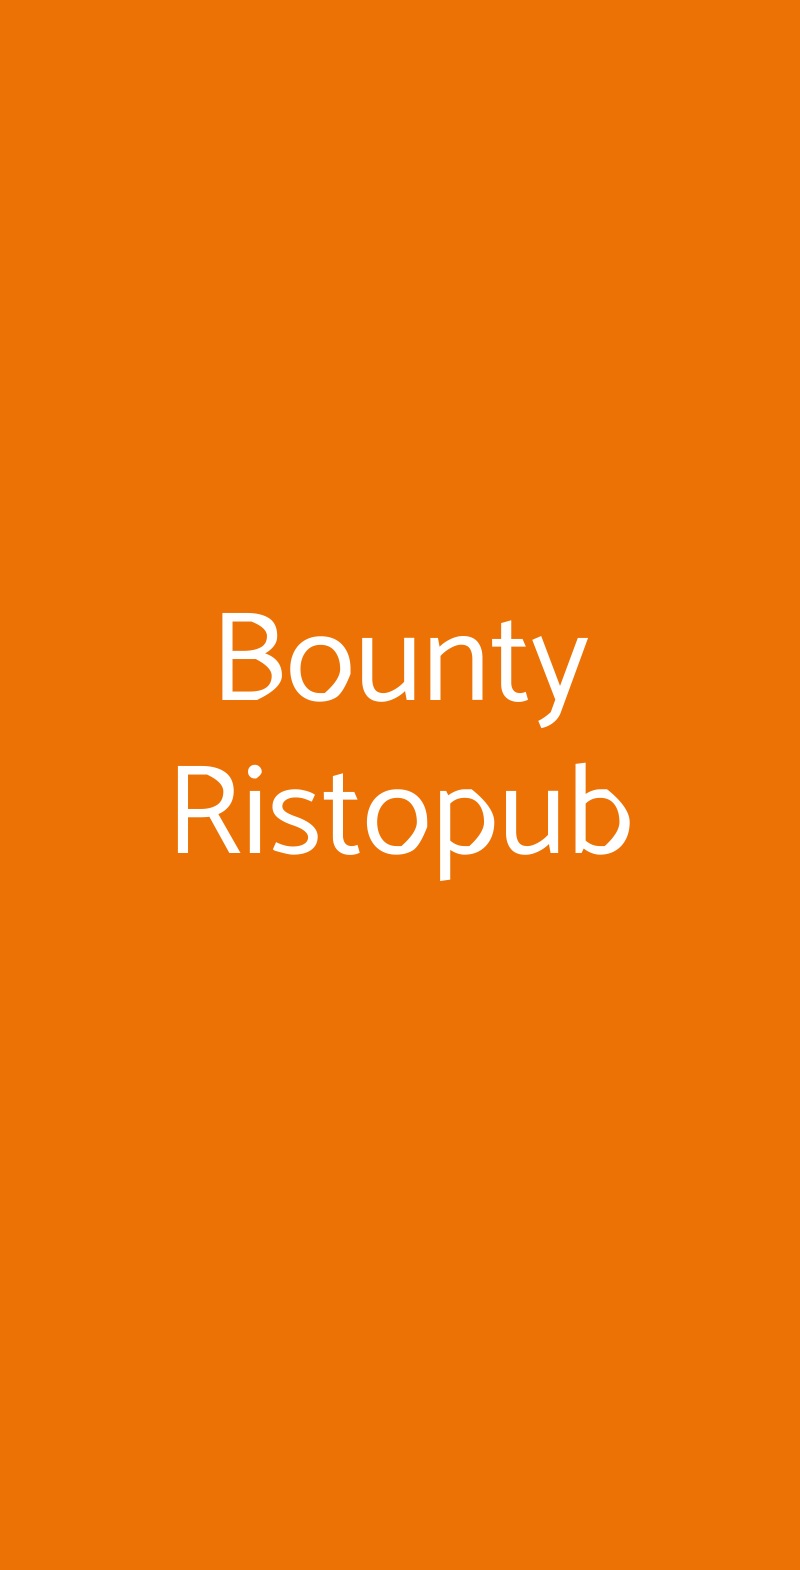 Bounty Ristopub Bologna menù 1 pagina